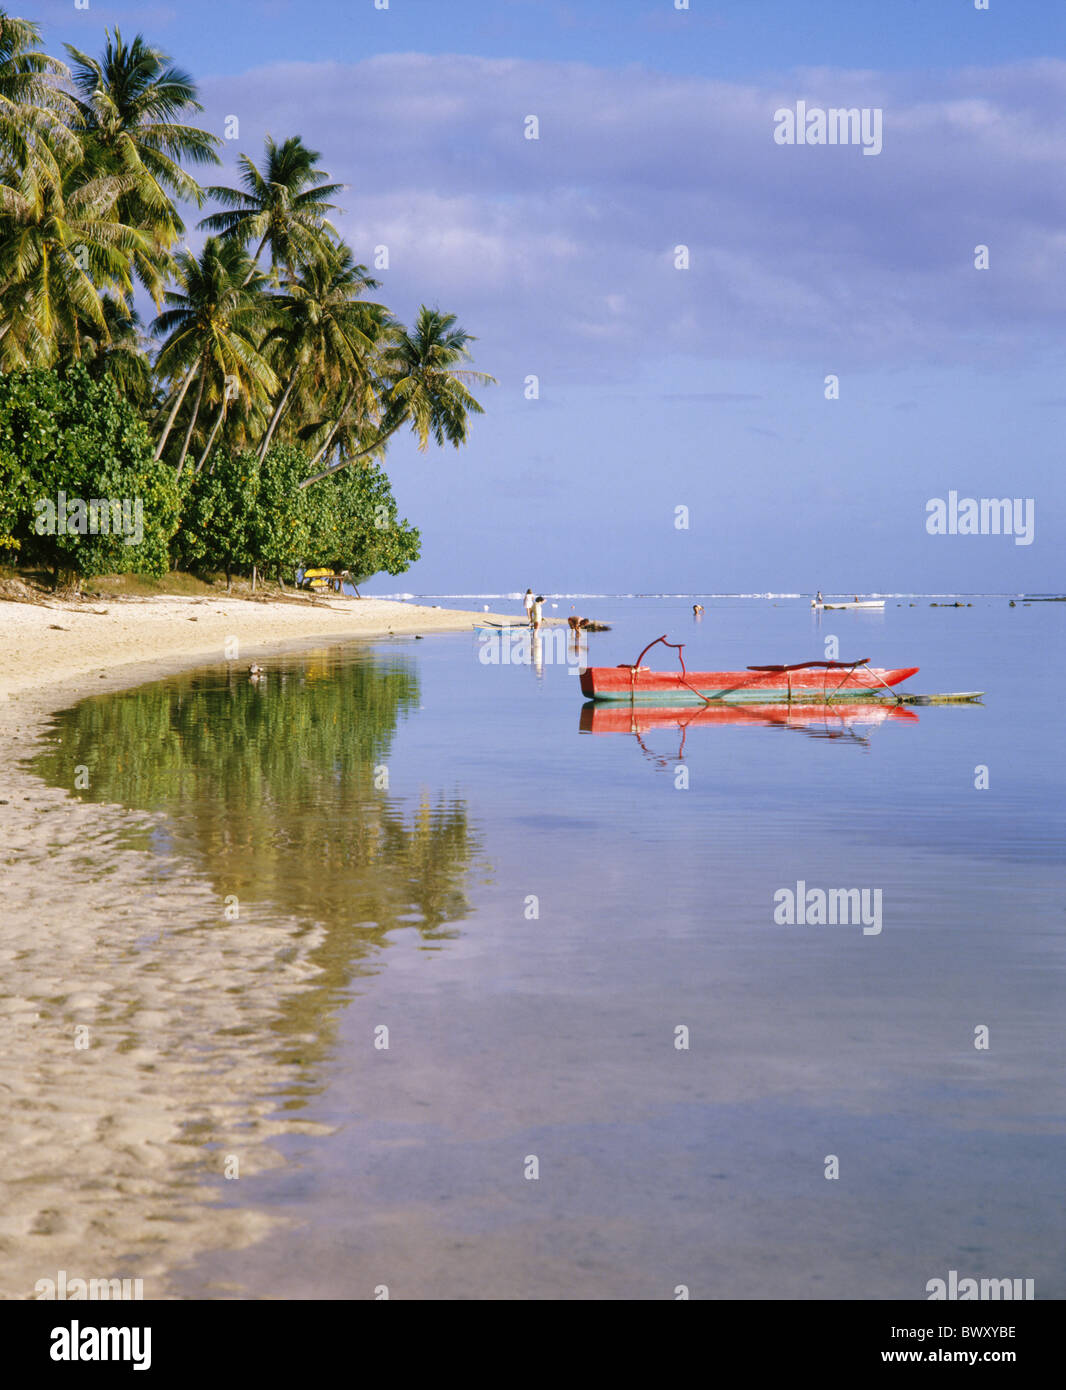 Ausleger Boot Meer Palmen Strände Meeresküsten Tahiti Pazifik Pazifik Stockfoto